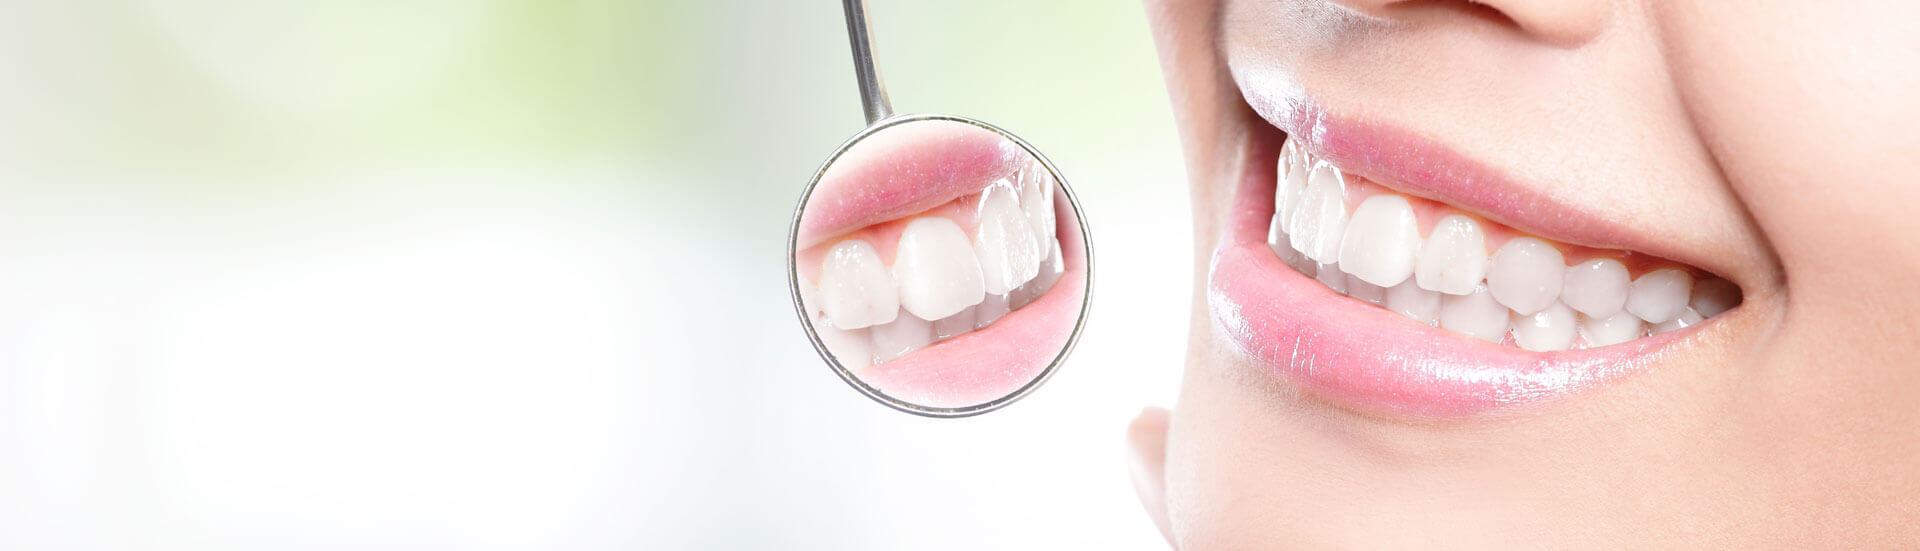 Maroondah Dental Care - Dentist Croydon | dentist | 212 Dorset Rd, Croydon VIC 3136, Australia | 61390072532 OR +61 3 9727 2088